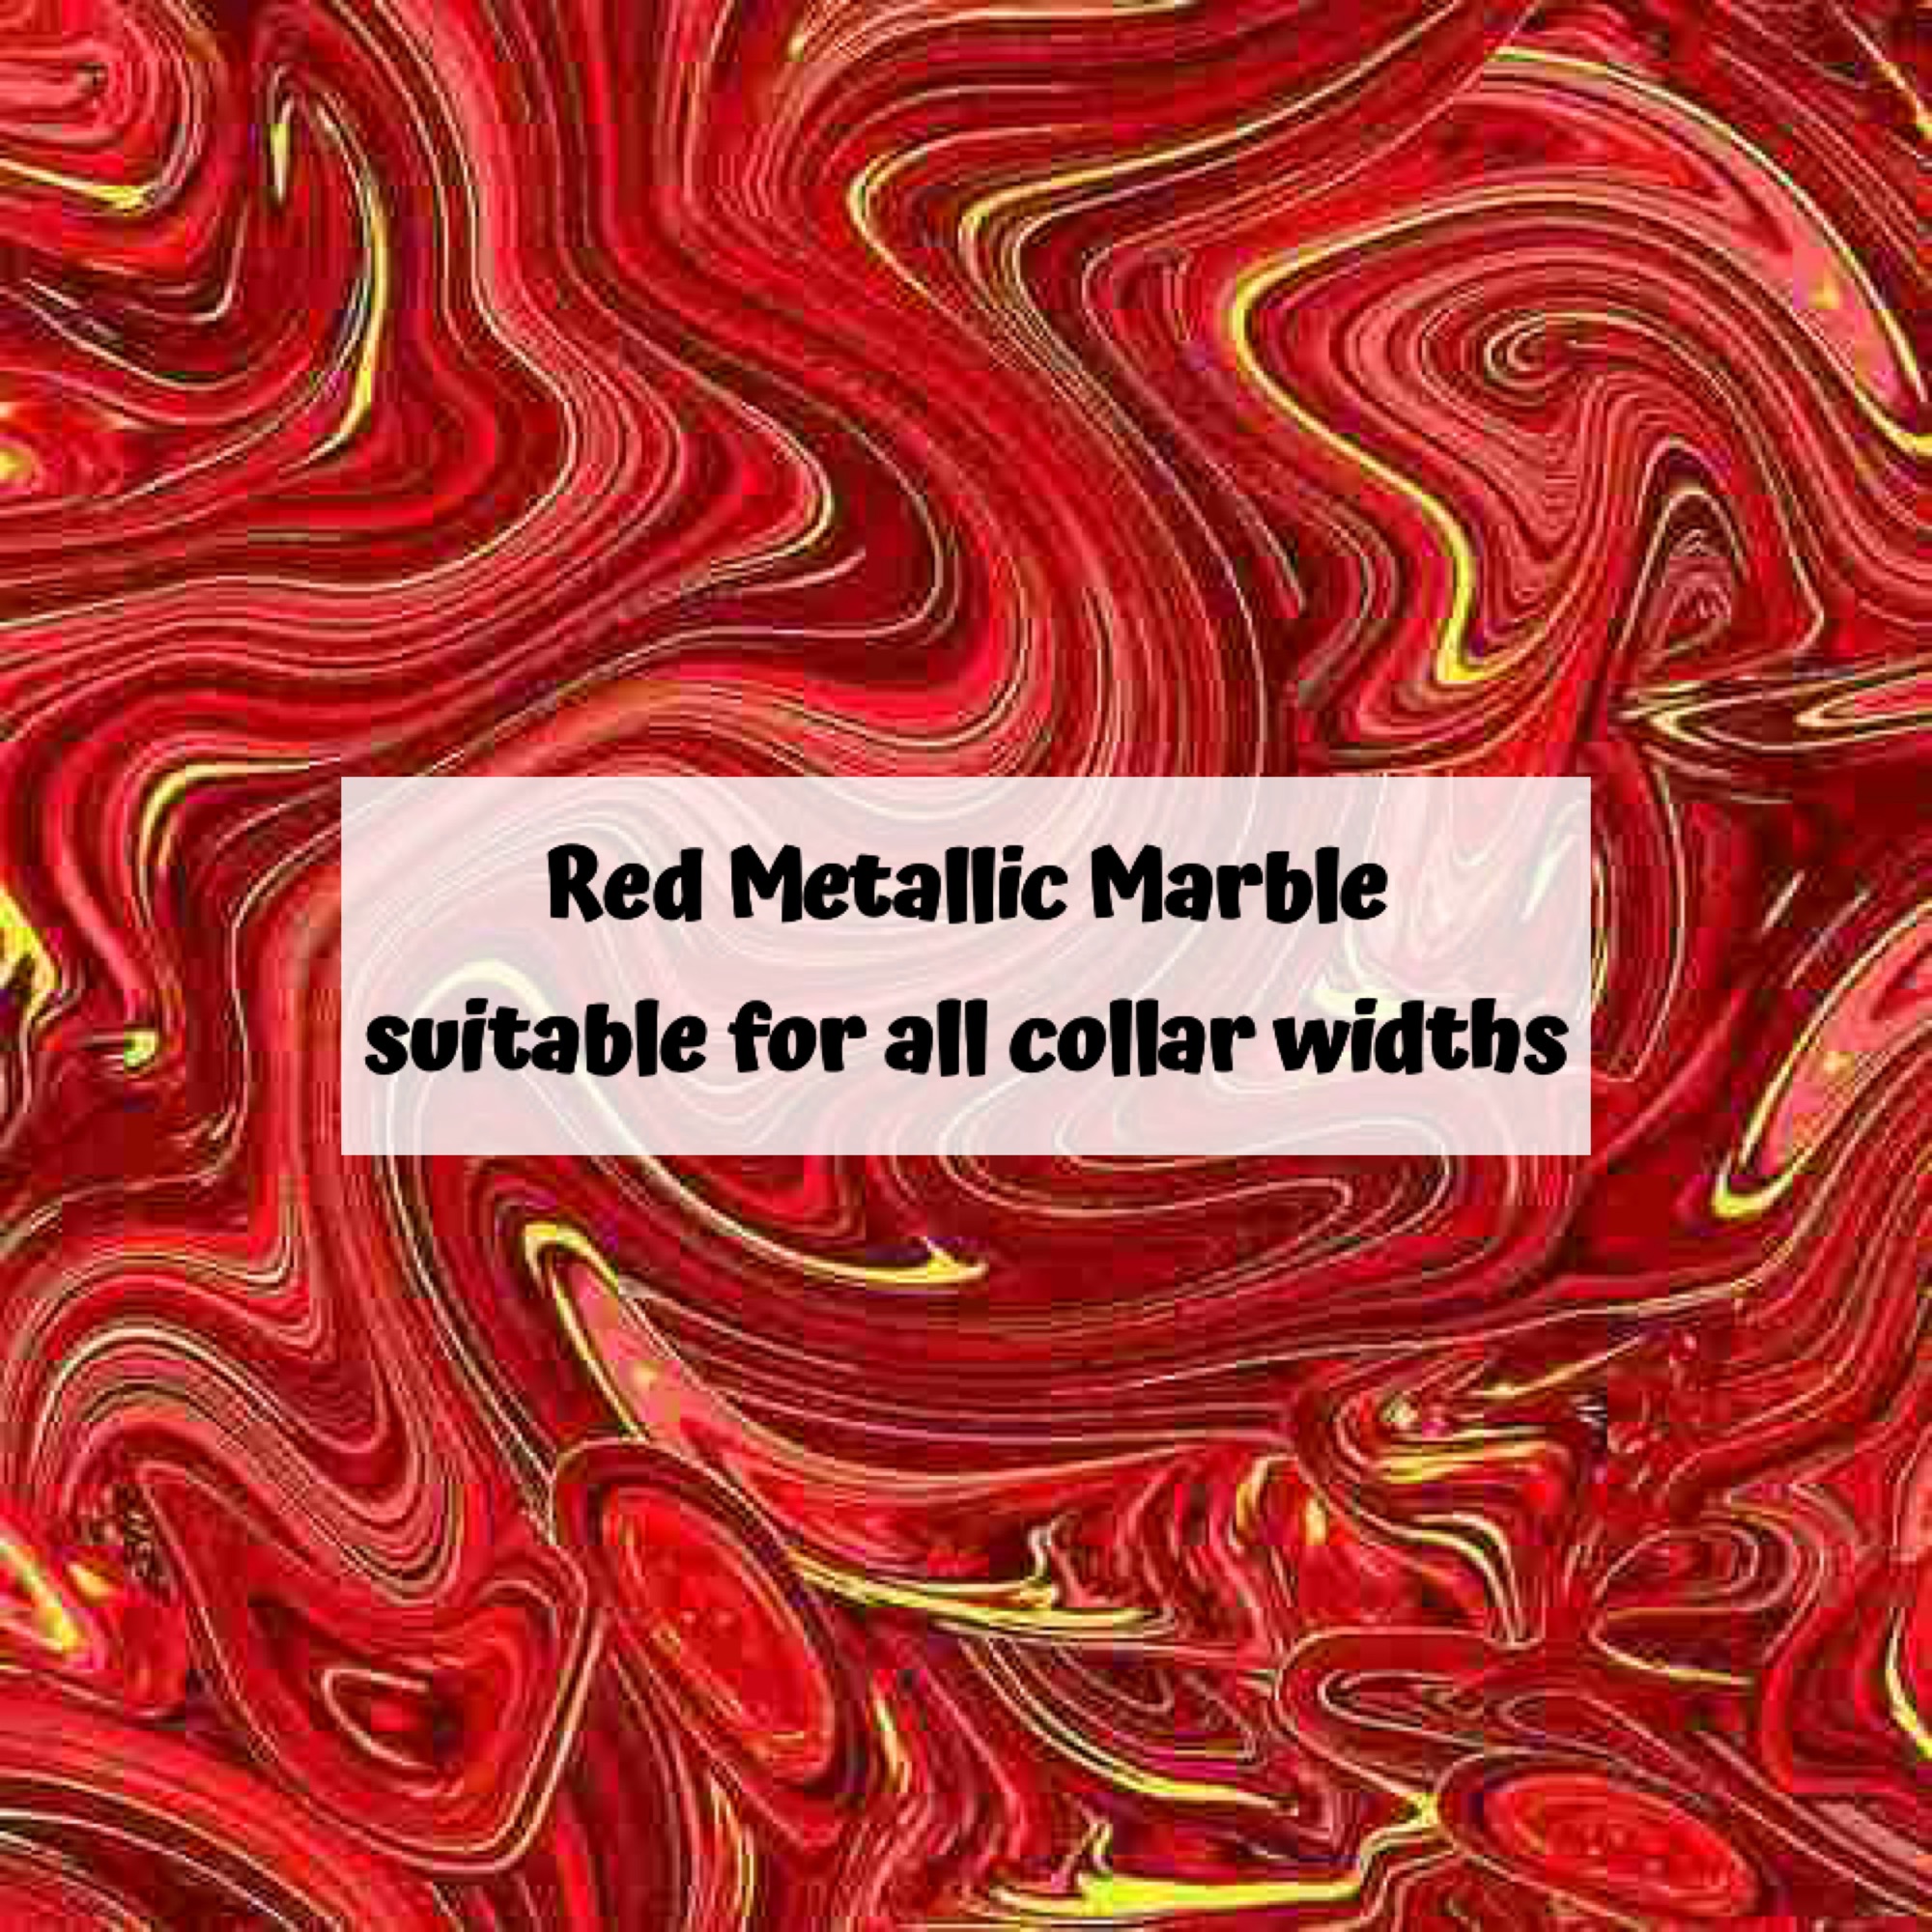 Red Metallic Marble